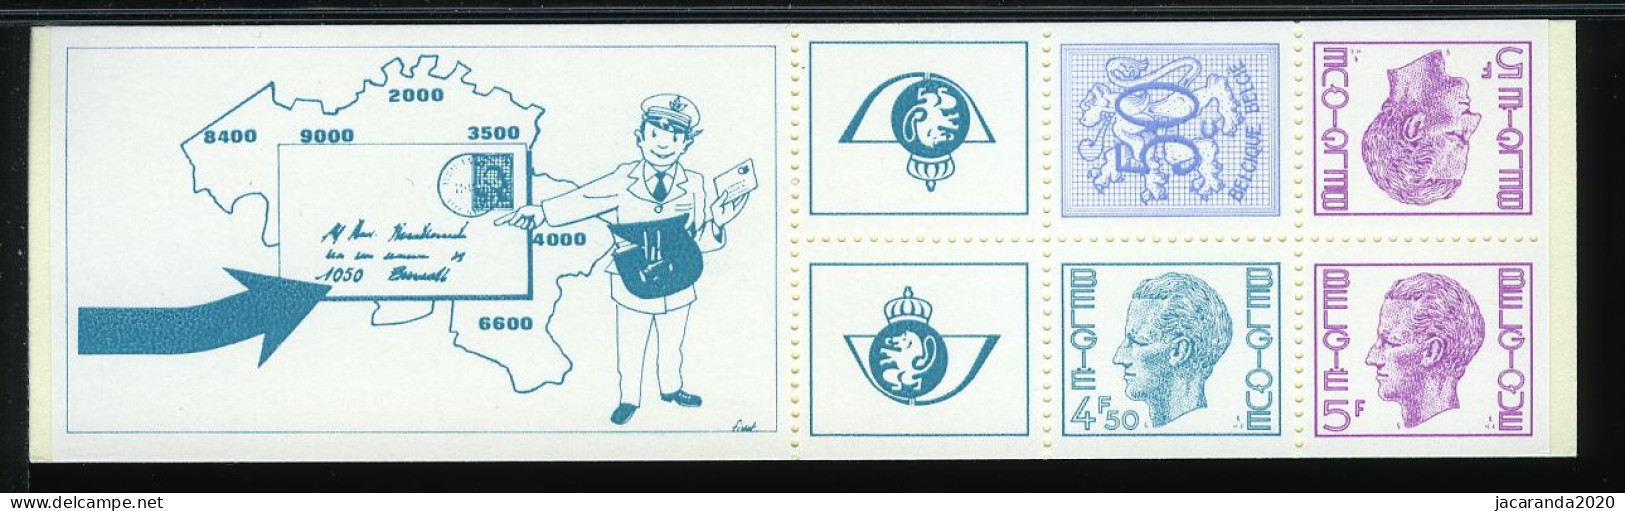 België B12 - Koning Boudewijn - Cijfer Op Heraldieke Leeuw - Roi Baudouin - Chiffre Sur Lion Héraldique - 1975 - 1953-2006 Modernos [B]